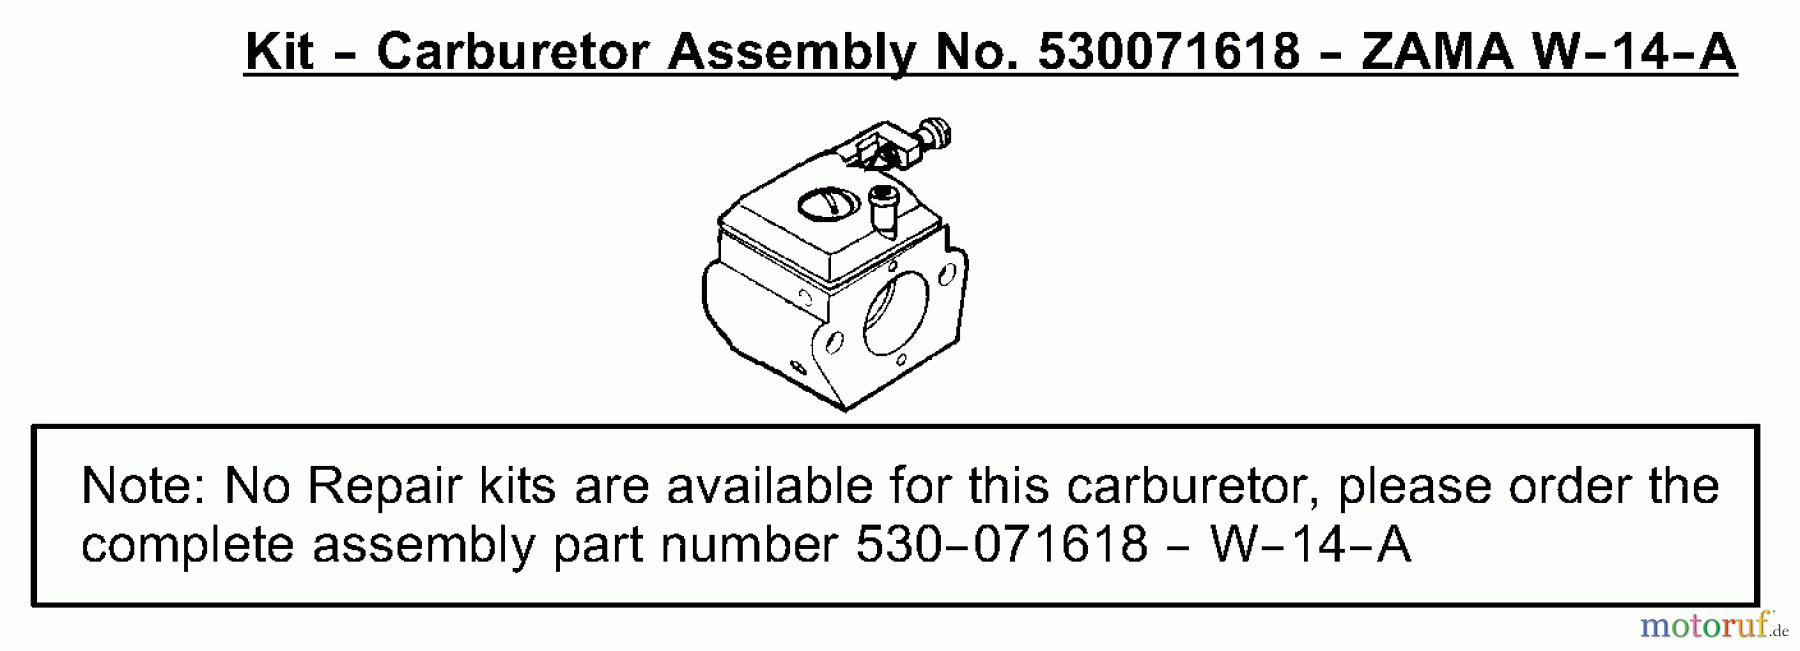  Poulan / Weed Eater Motorsägen 2155 (Type 3) - Poulan Plus Chainsaw Carburetor Assembly (Zama W-14-A) P/N 530071618